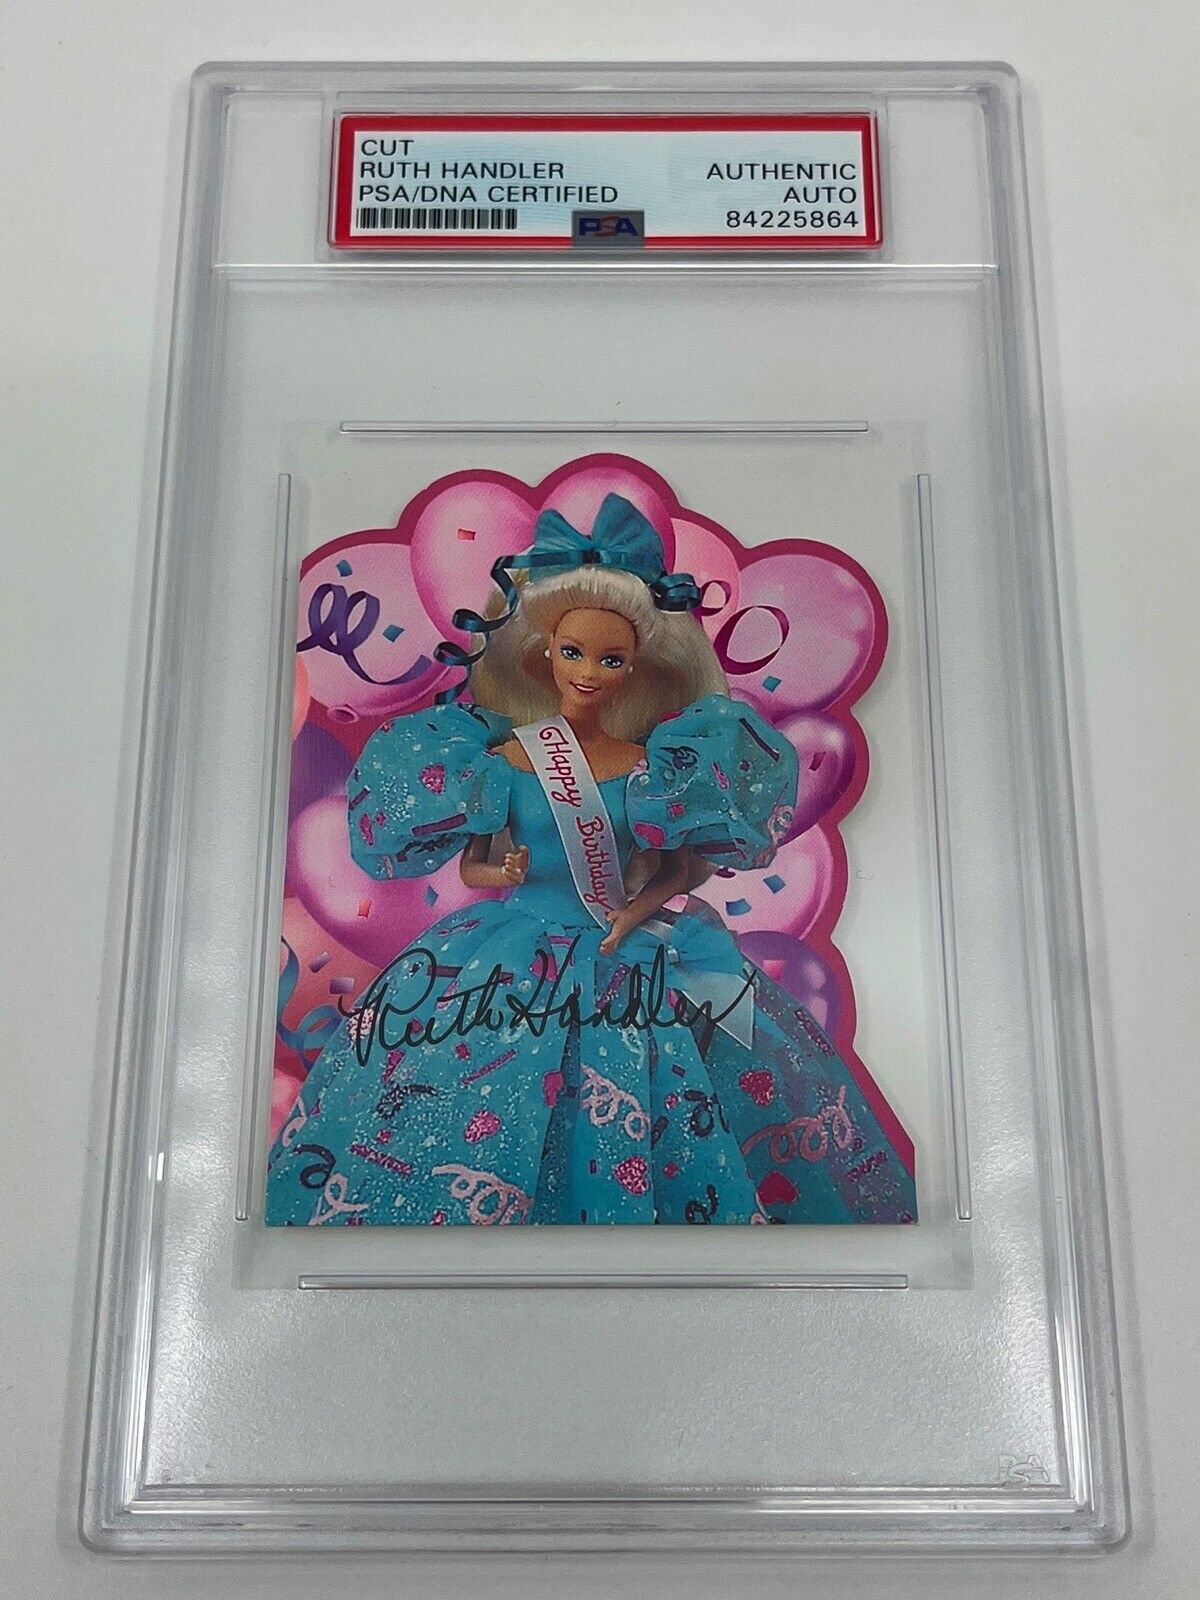 møbel Foresee Permanent Ruth Handler Barbie Doll Inventor Signed Autograph Cut PSA DNA j2f1c *64 |  eBay